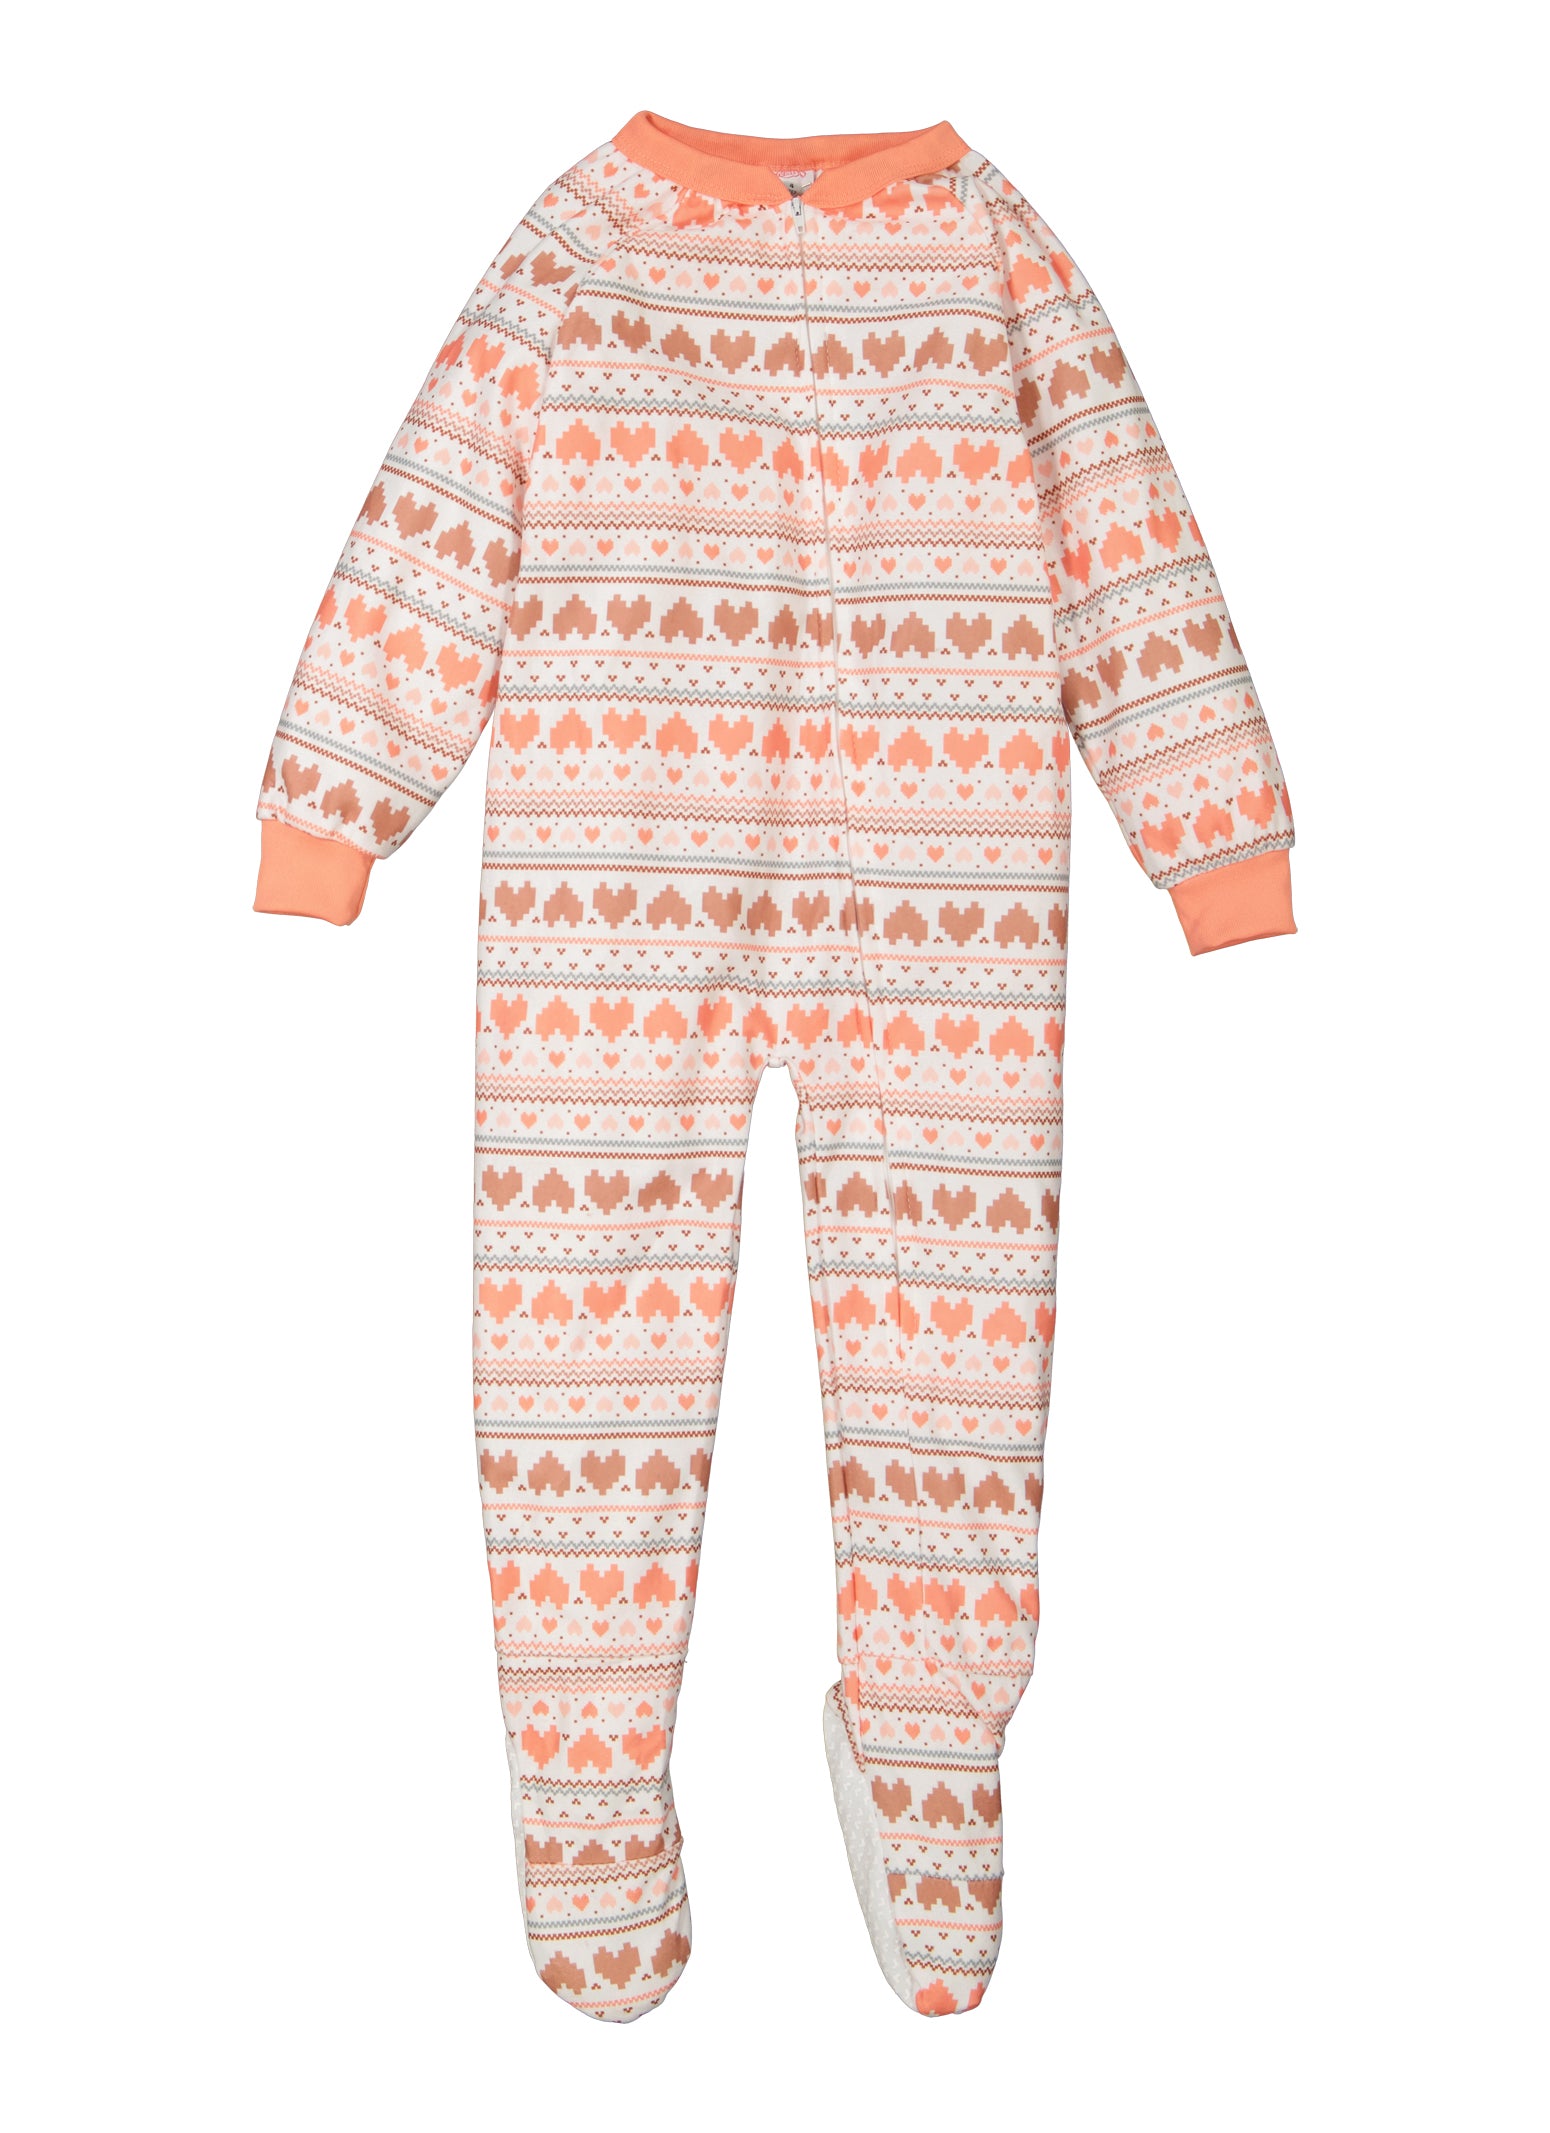 Little Girls Printed Fleece Footed Pajamas, Multi, Size 4